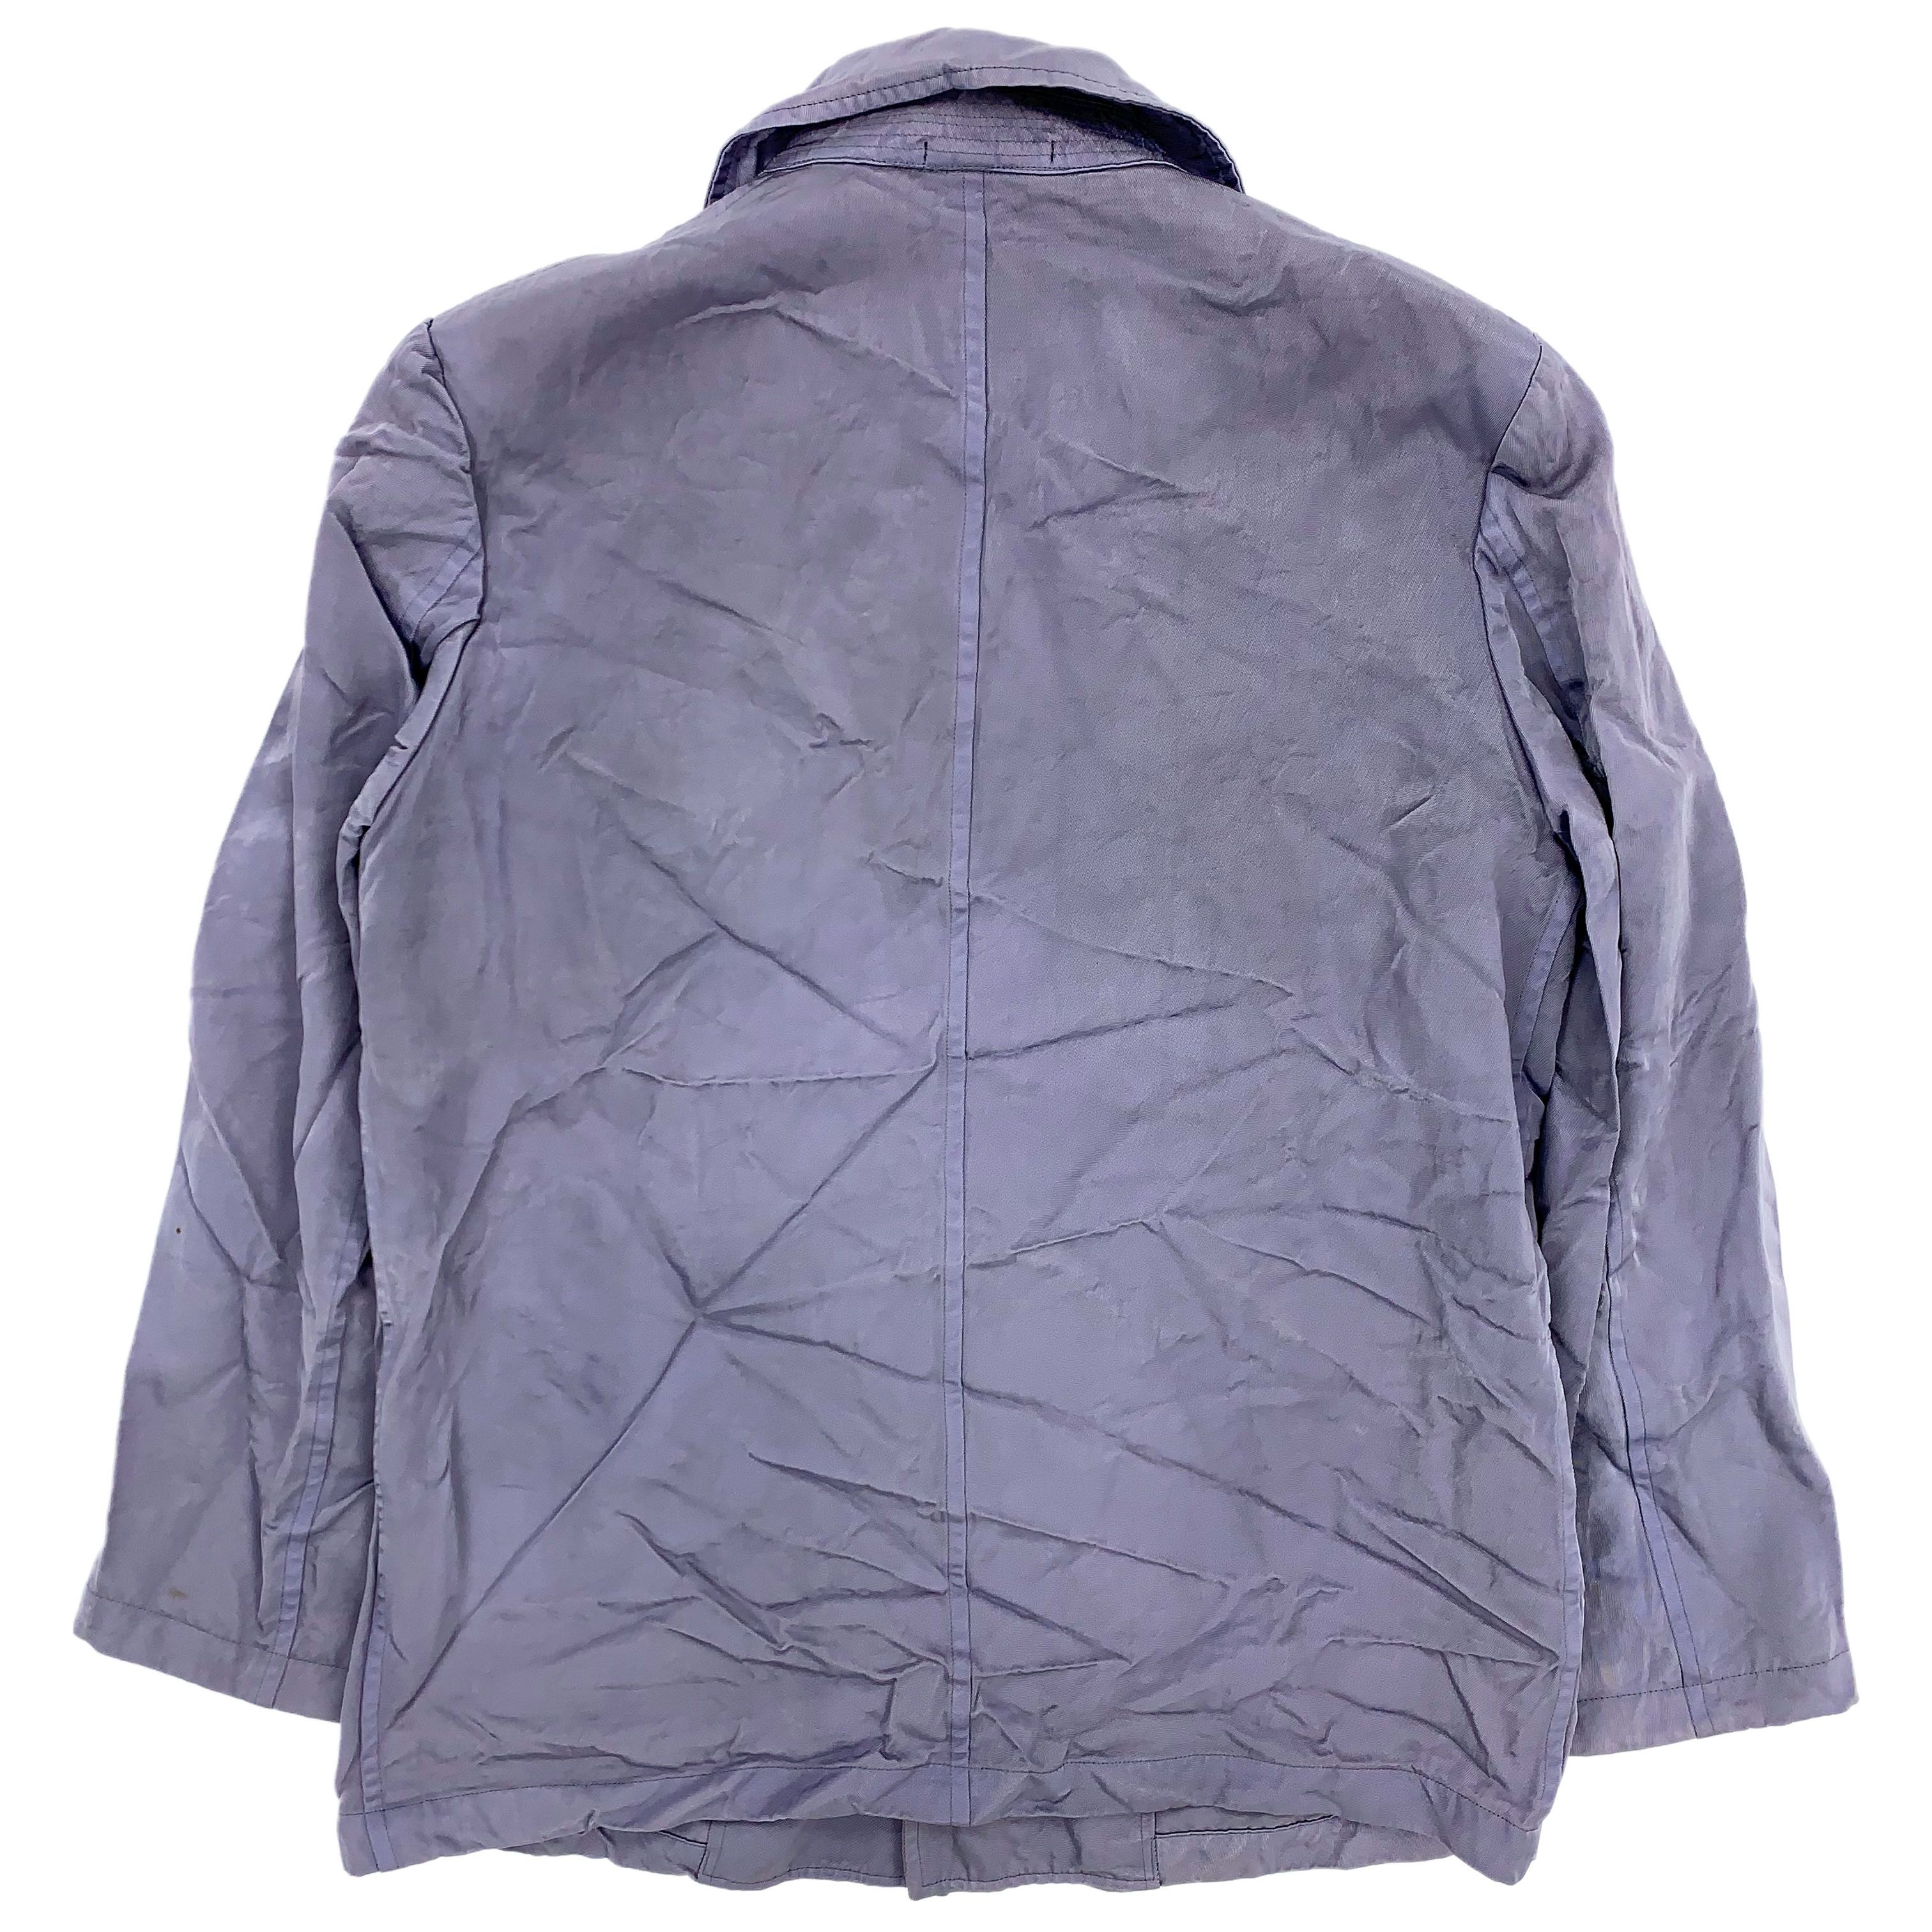 SS99 Reversible Lace Ruffled Lining Nylon Jacket - 7